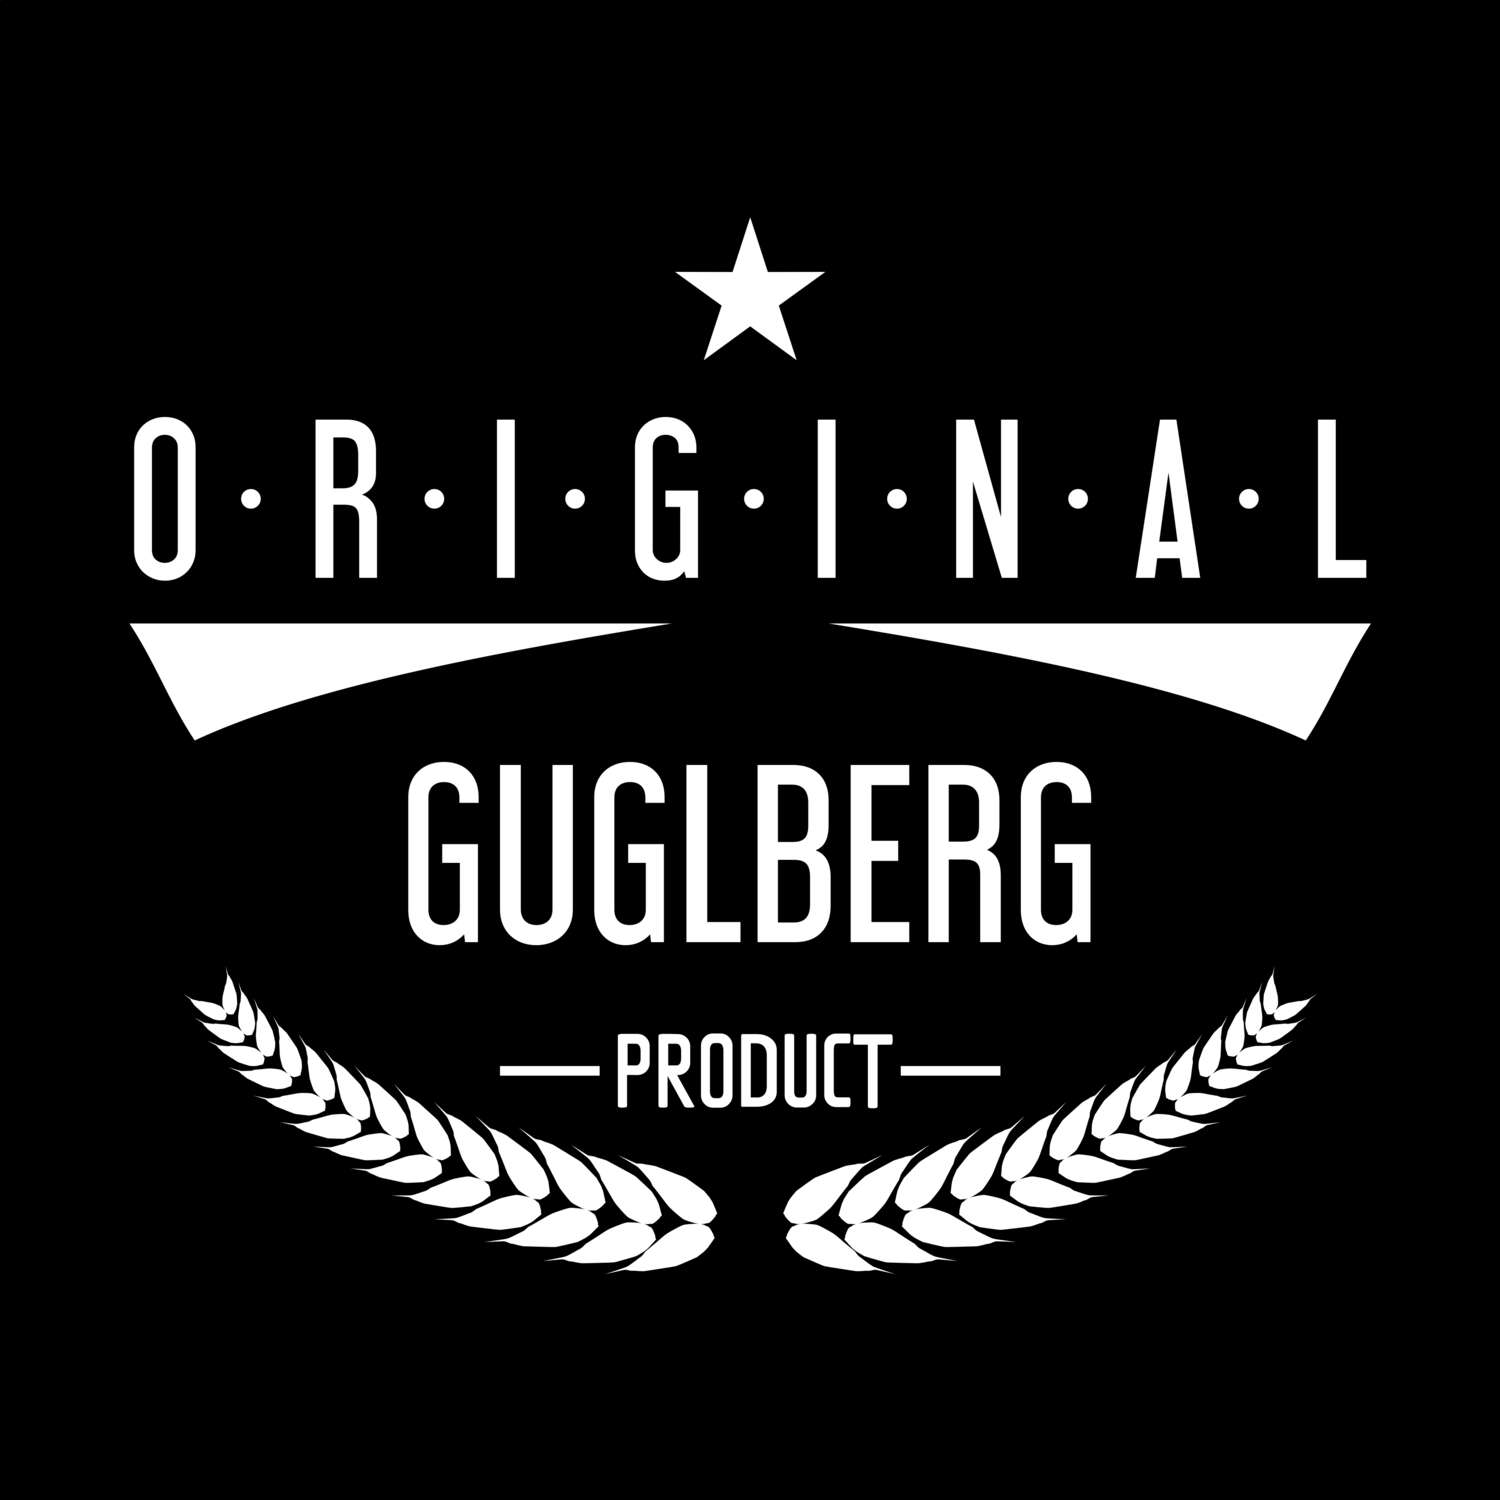 Guglberg T-Shirt »Original Product«